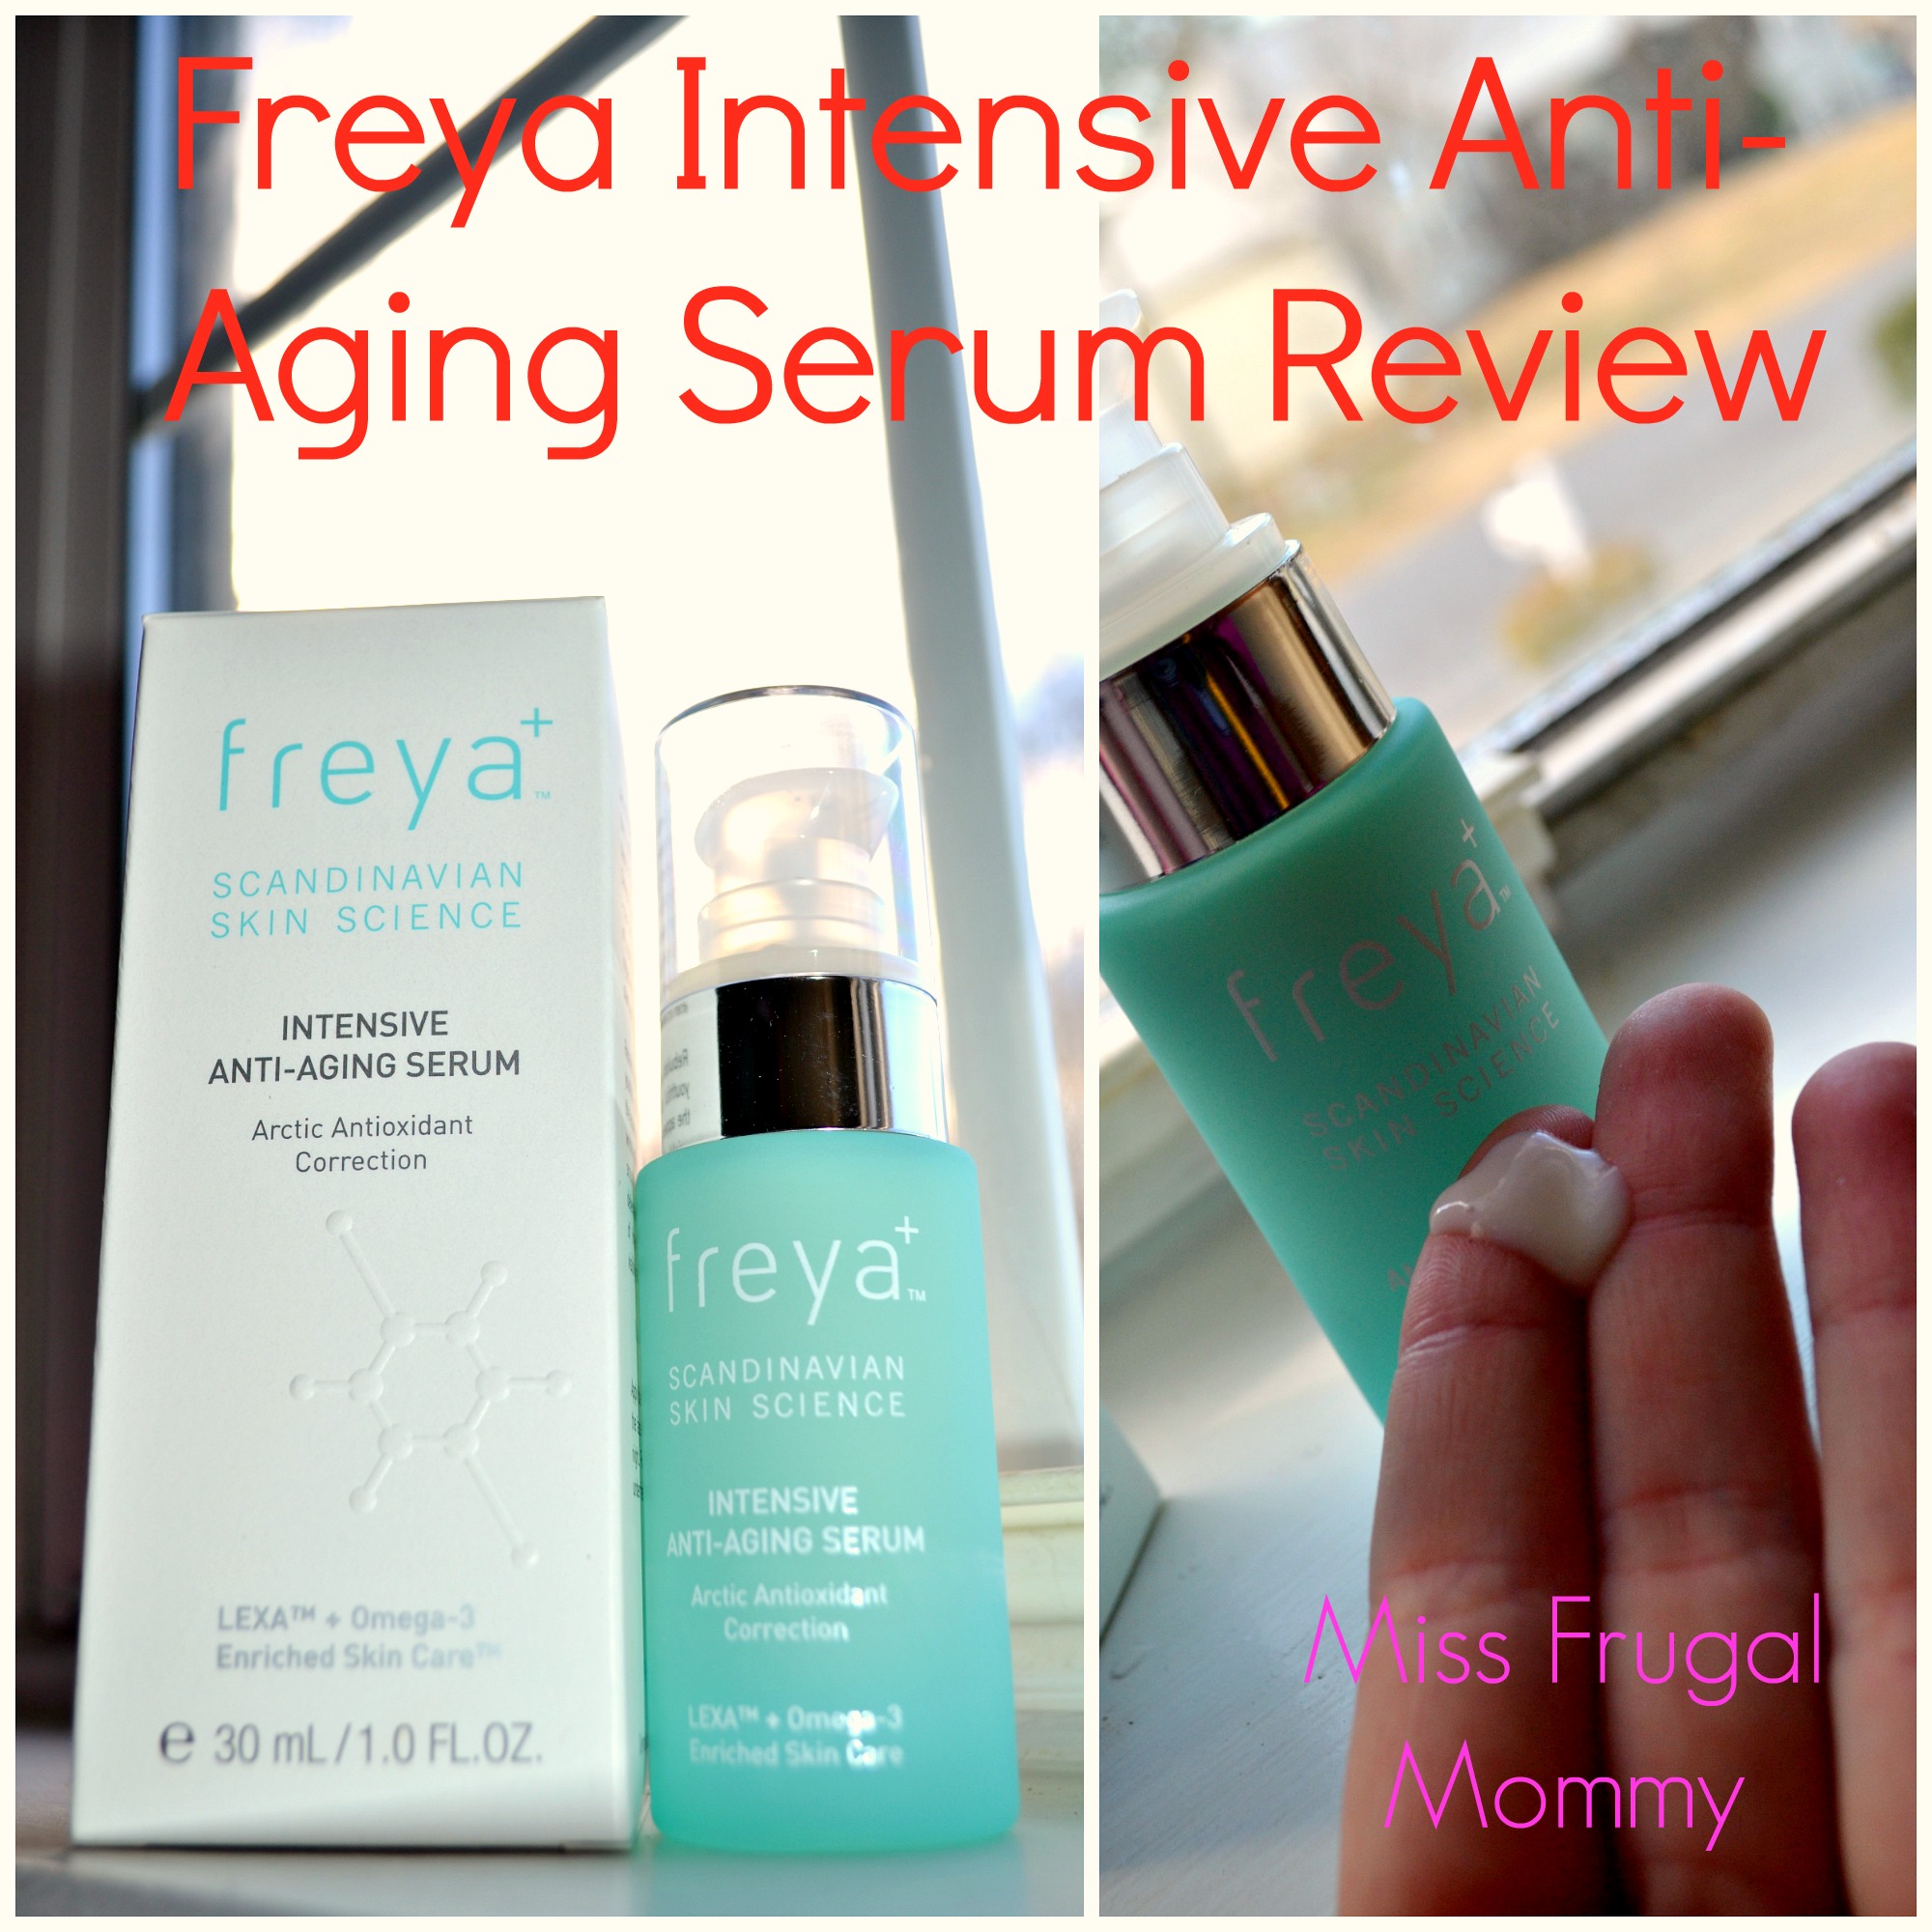 Freya Intensive Anti-Aging Serum Review